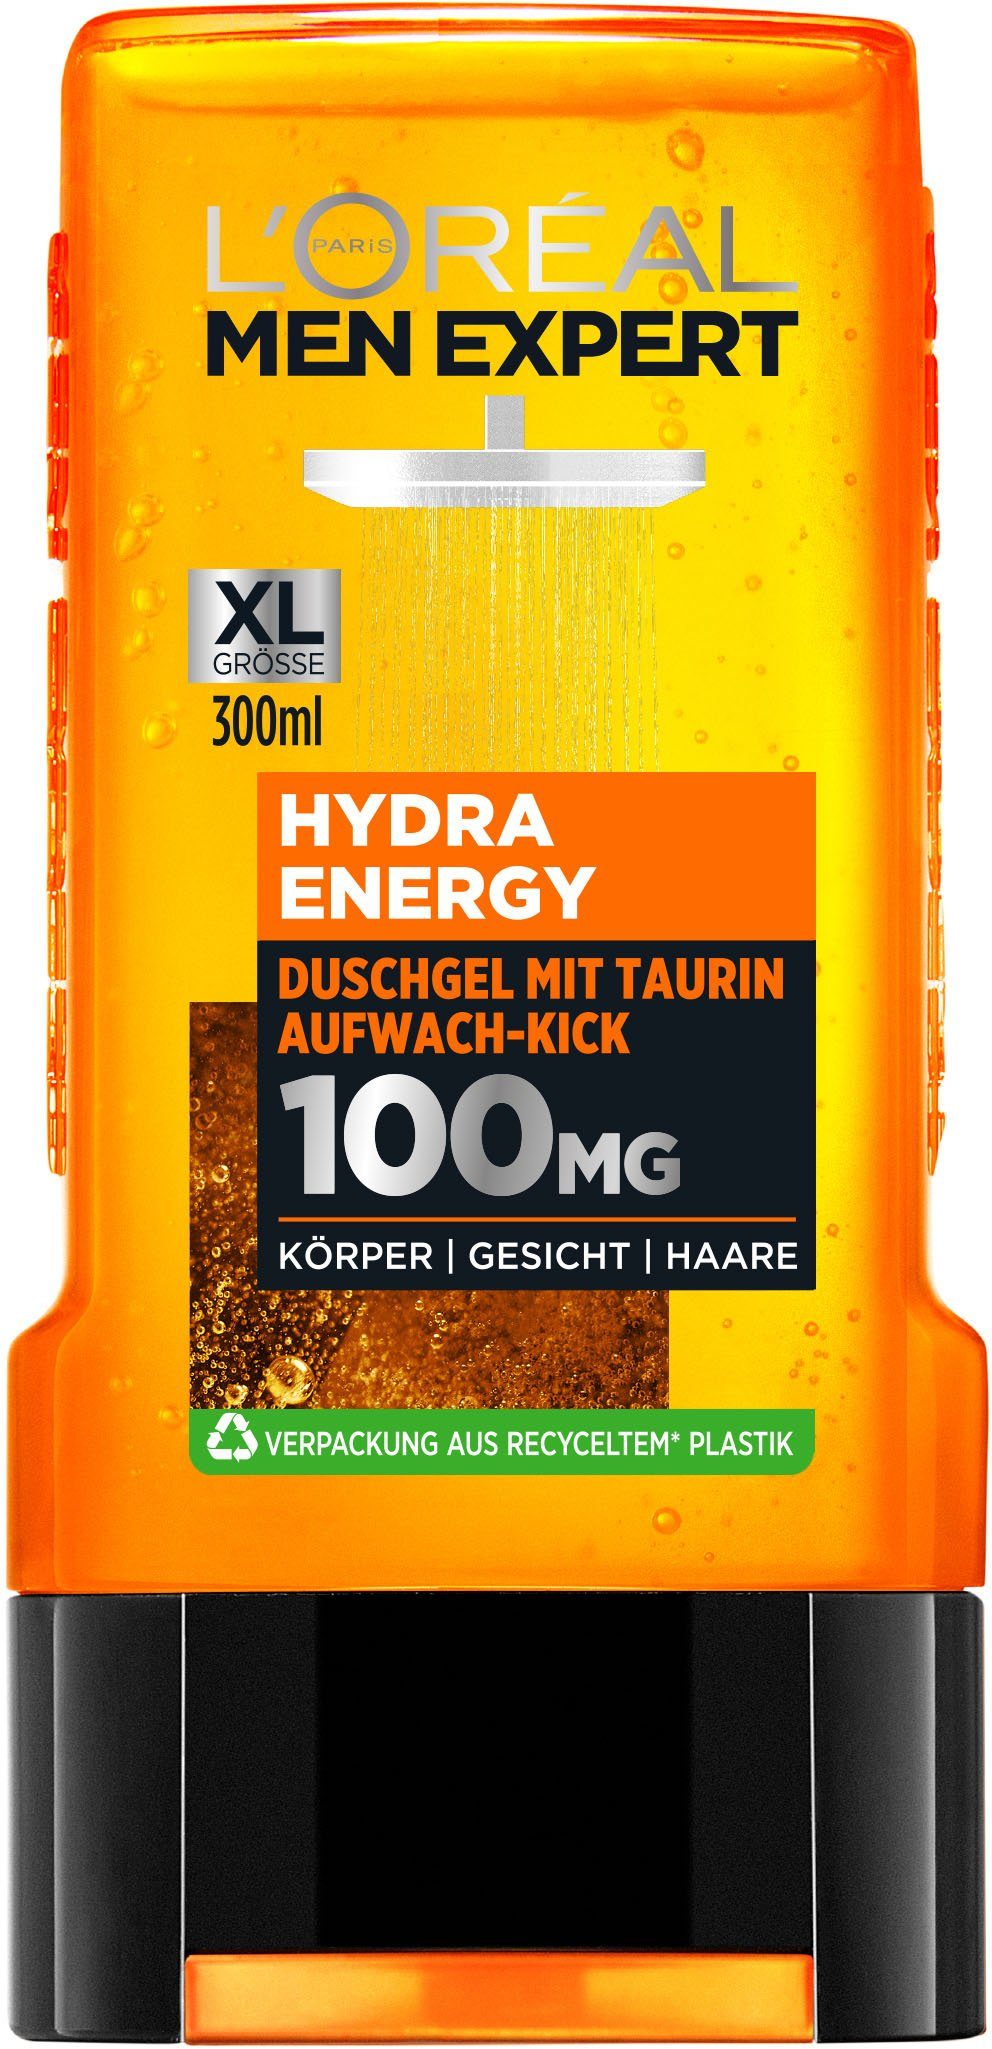 Energy Taurin, L'ORÉAL Hydra PARIS MEN 6-tlg. Duschgel EXPERT